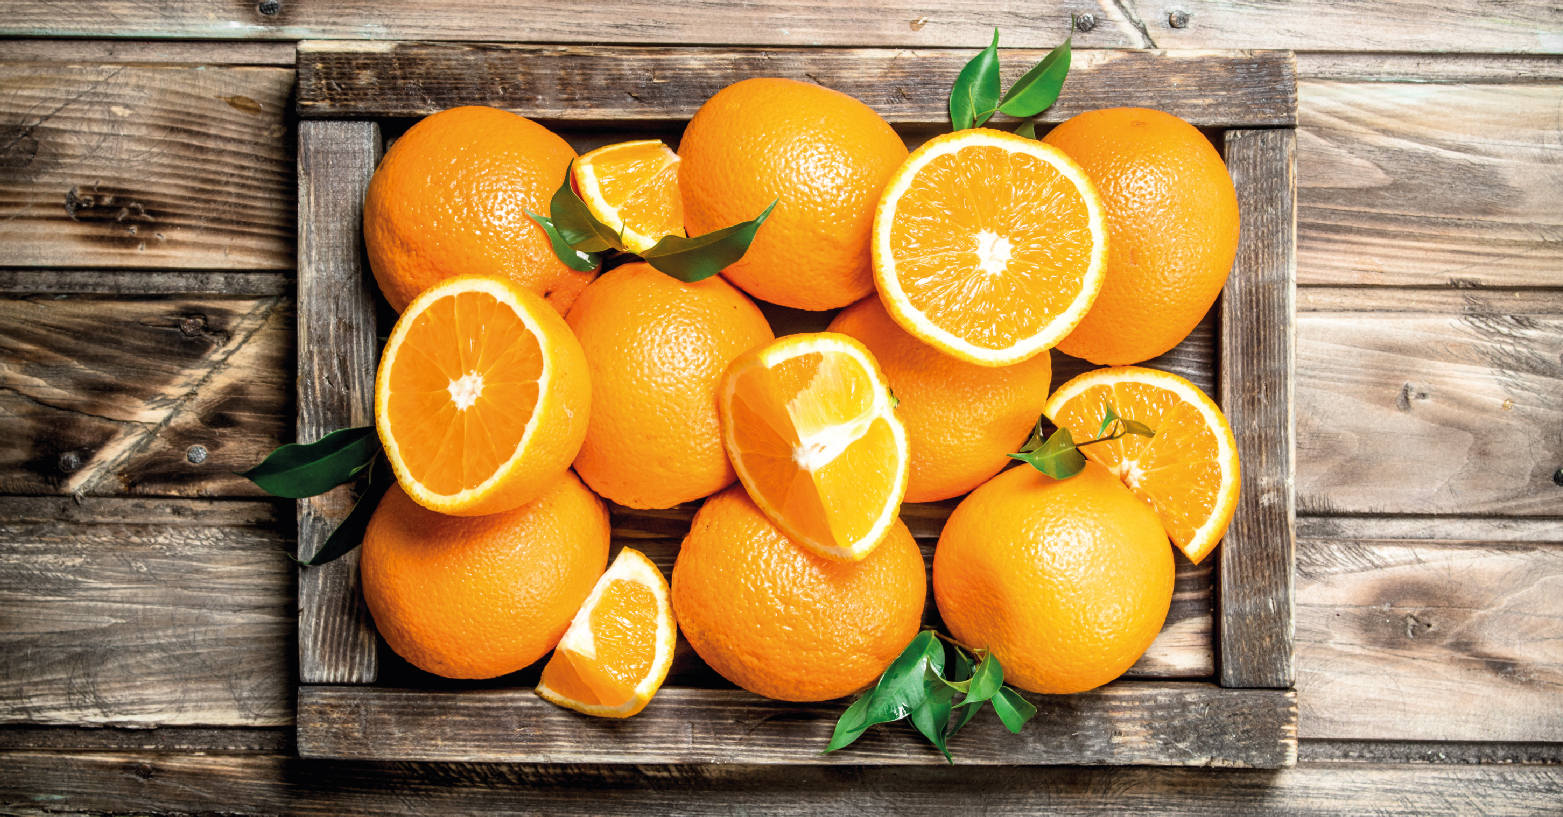 Naranja dulce y jugosa. Una buena carga de vitamina C